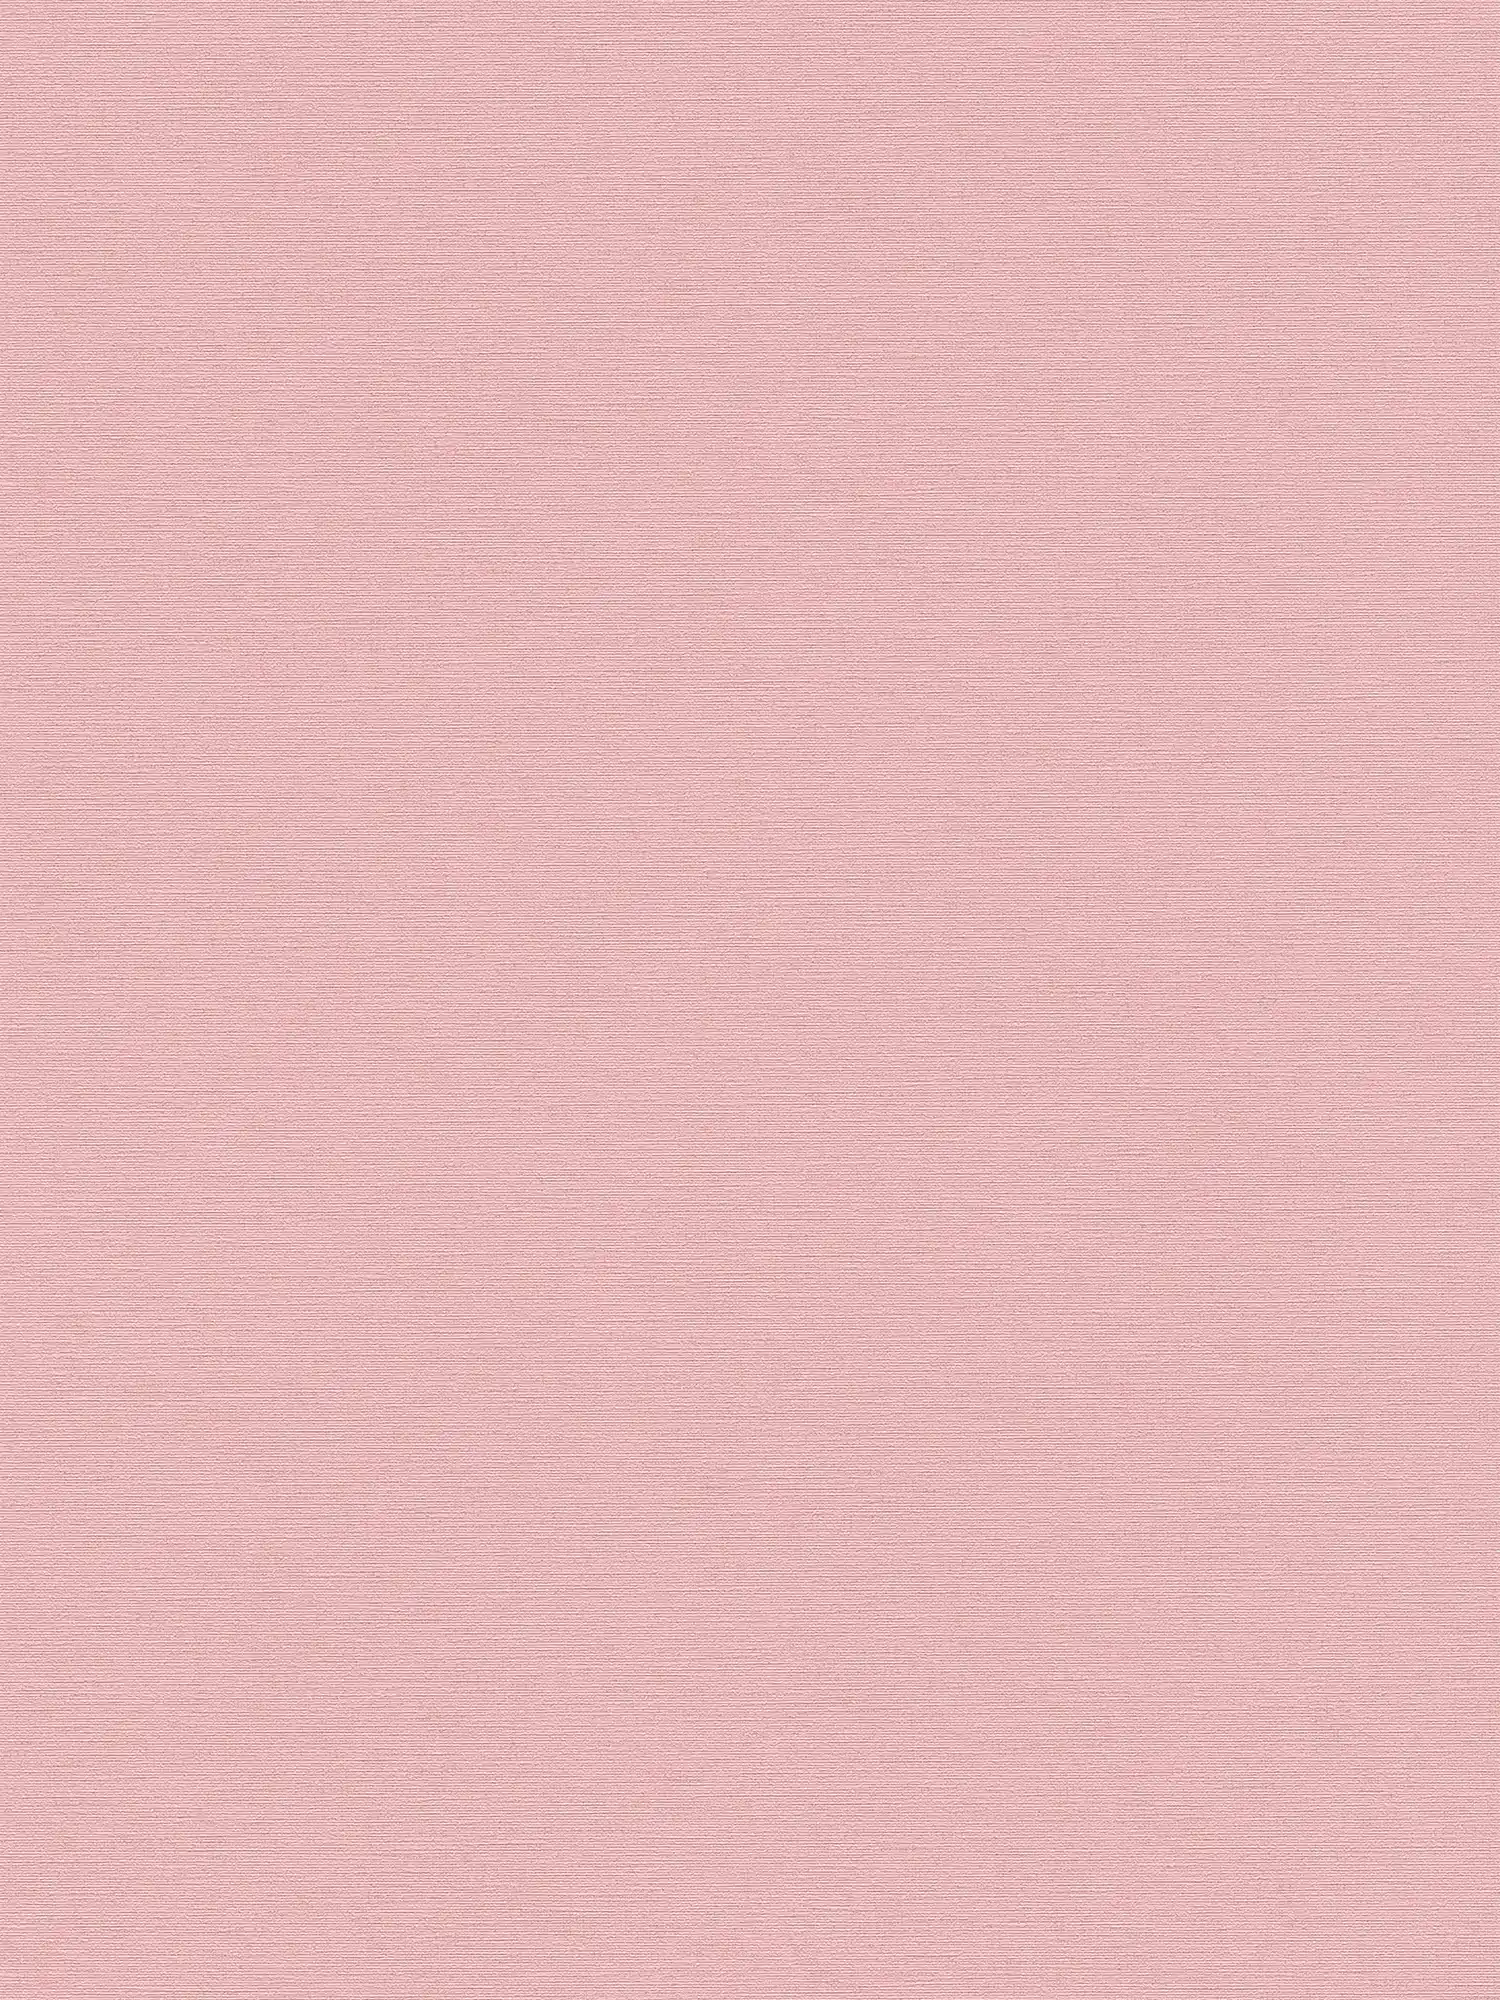 Plain non-woven wallpaper with linen texture - pink
